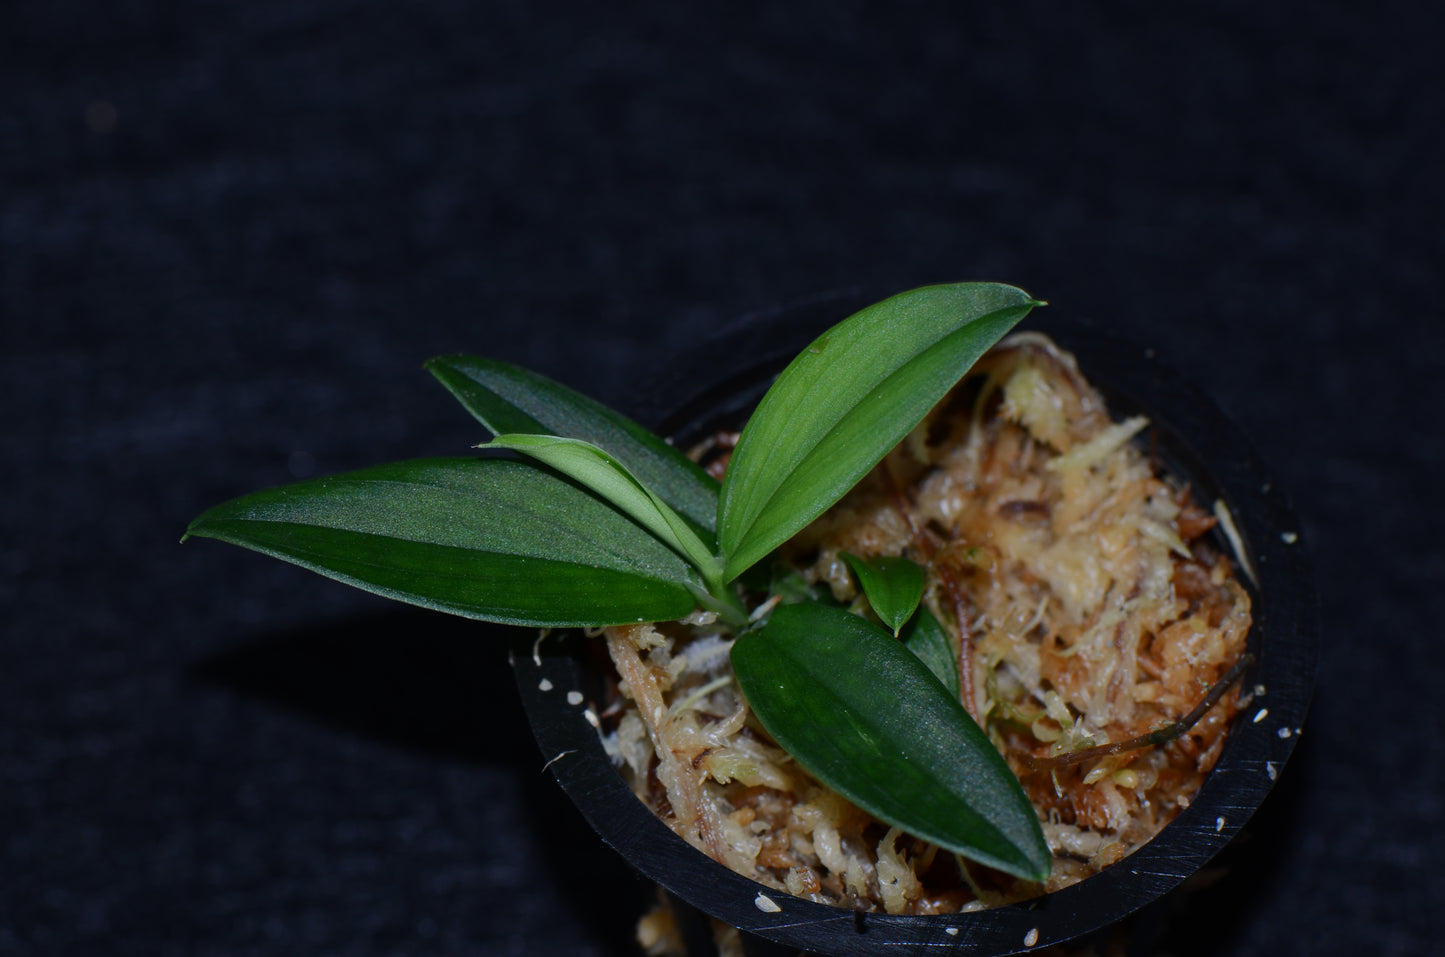 Philodendron sp. "Mini Nauta"